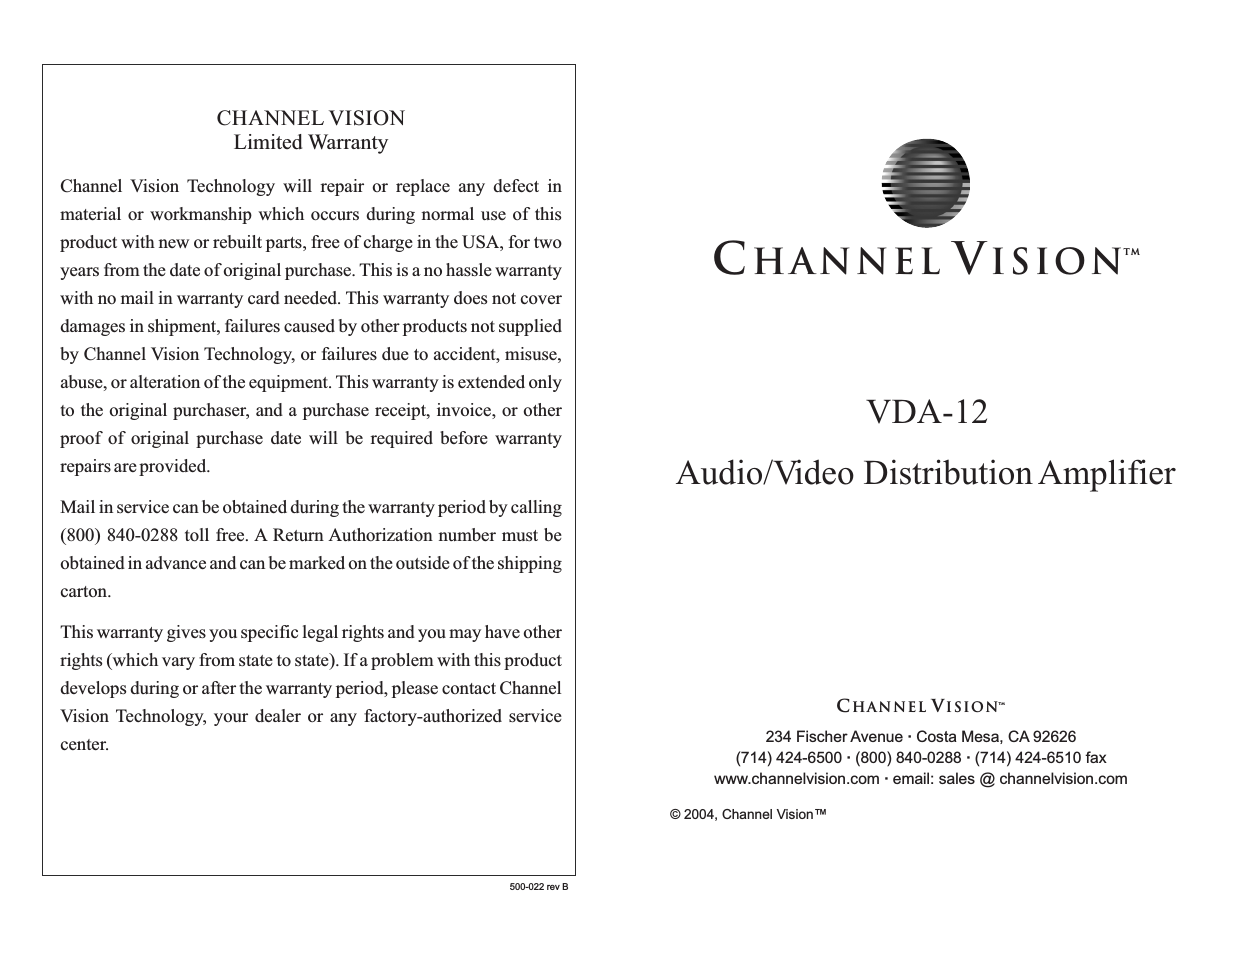 Audio/Video Distribution Amplifier VDA-12